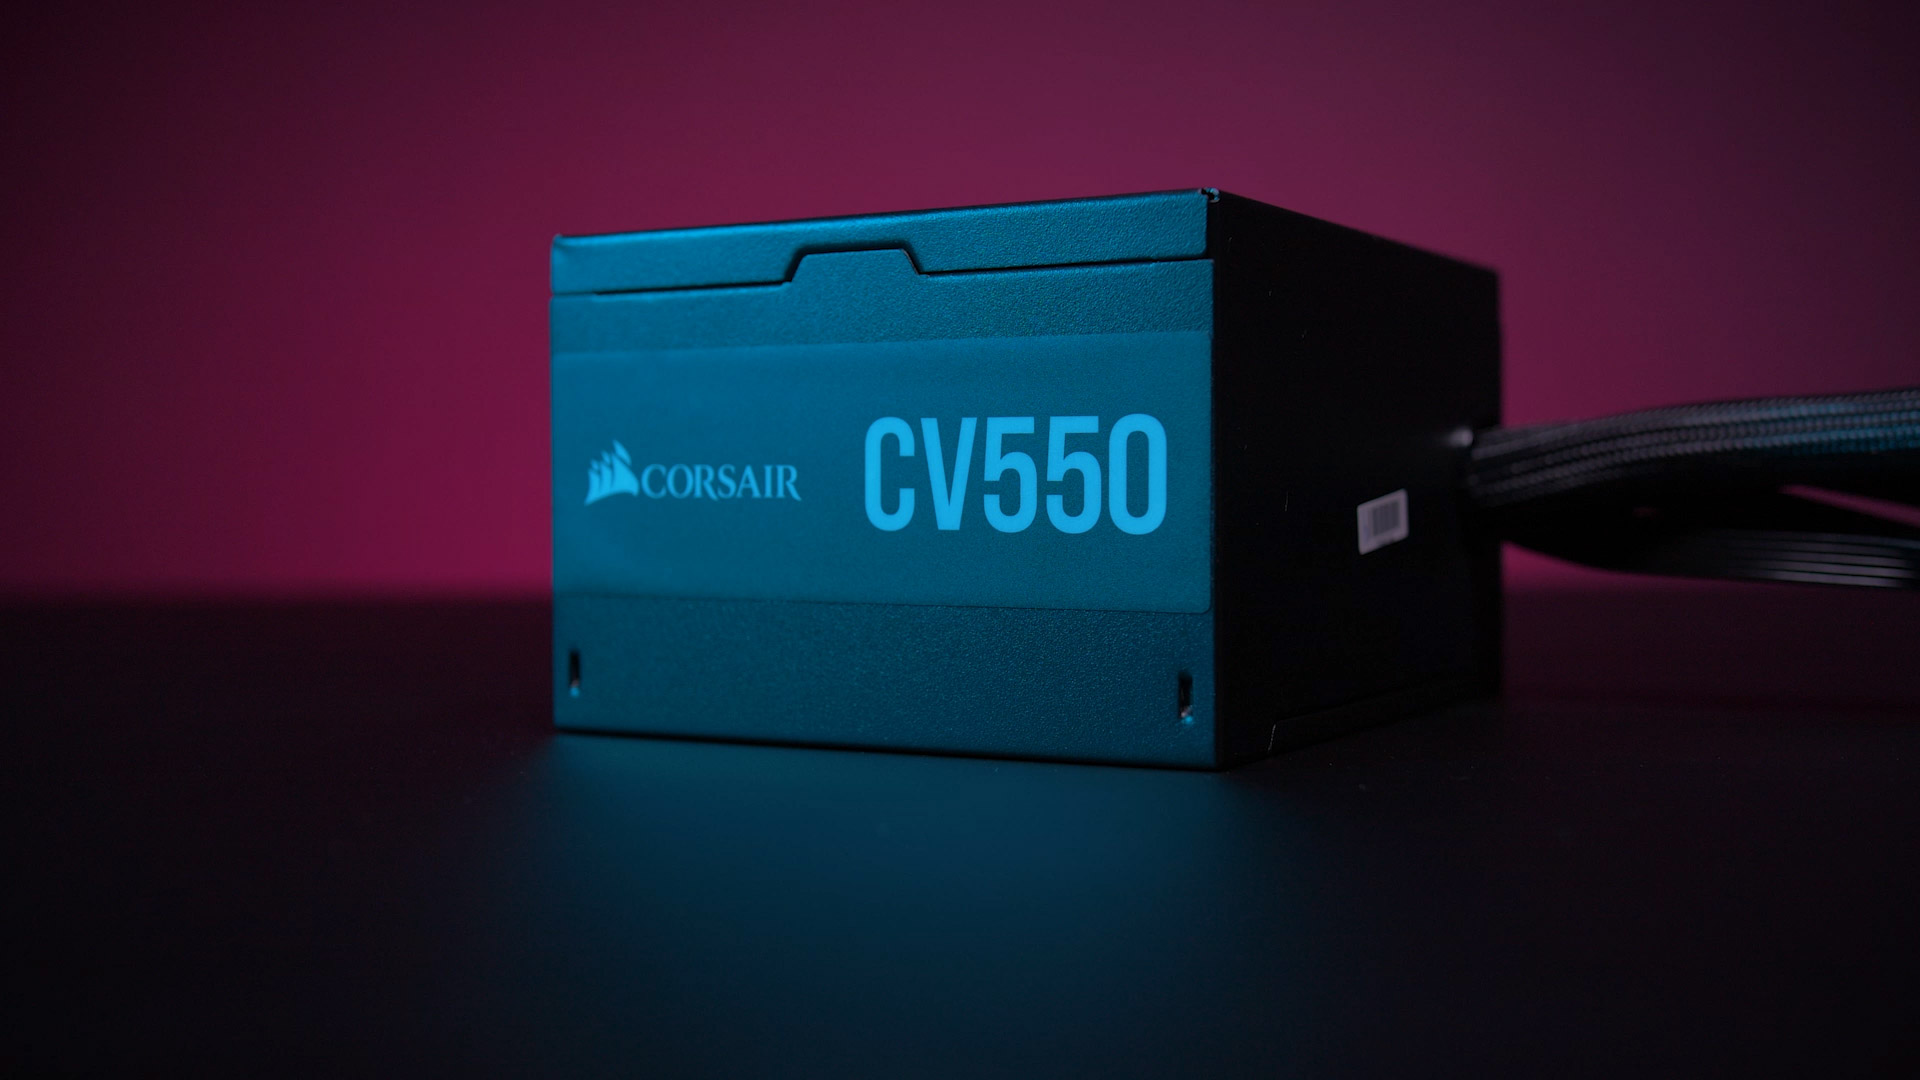 CORSAIR - CV650 - Bloc d'alimentation - 650 Watts - CV Series